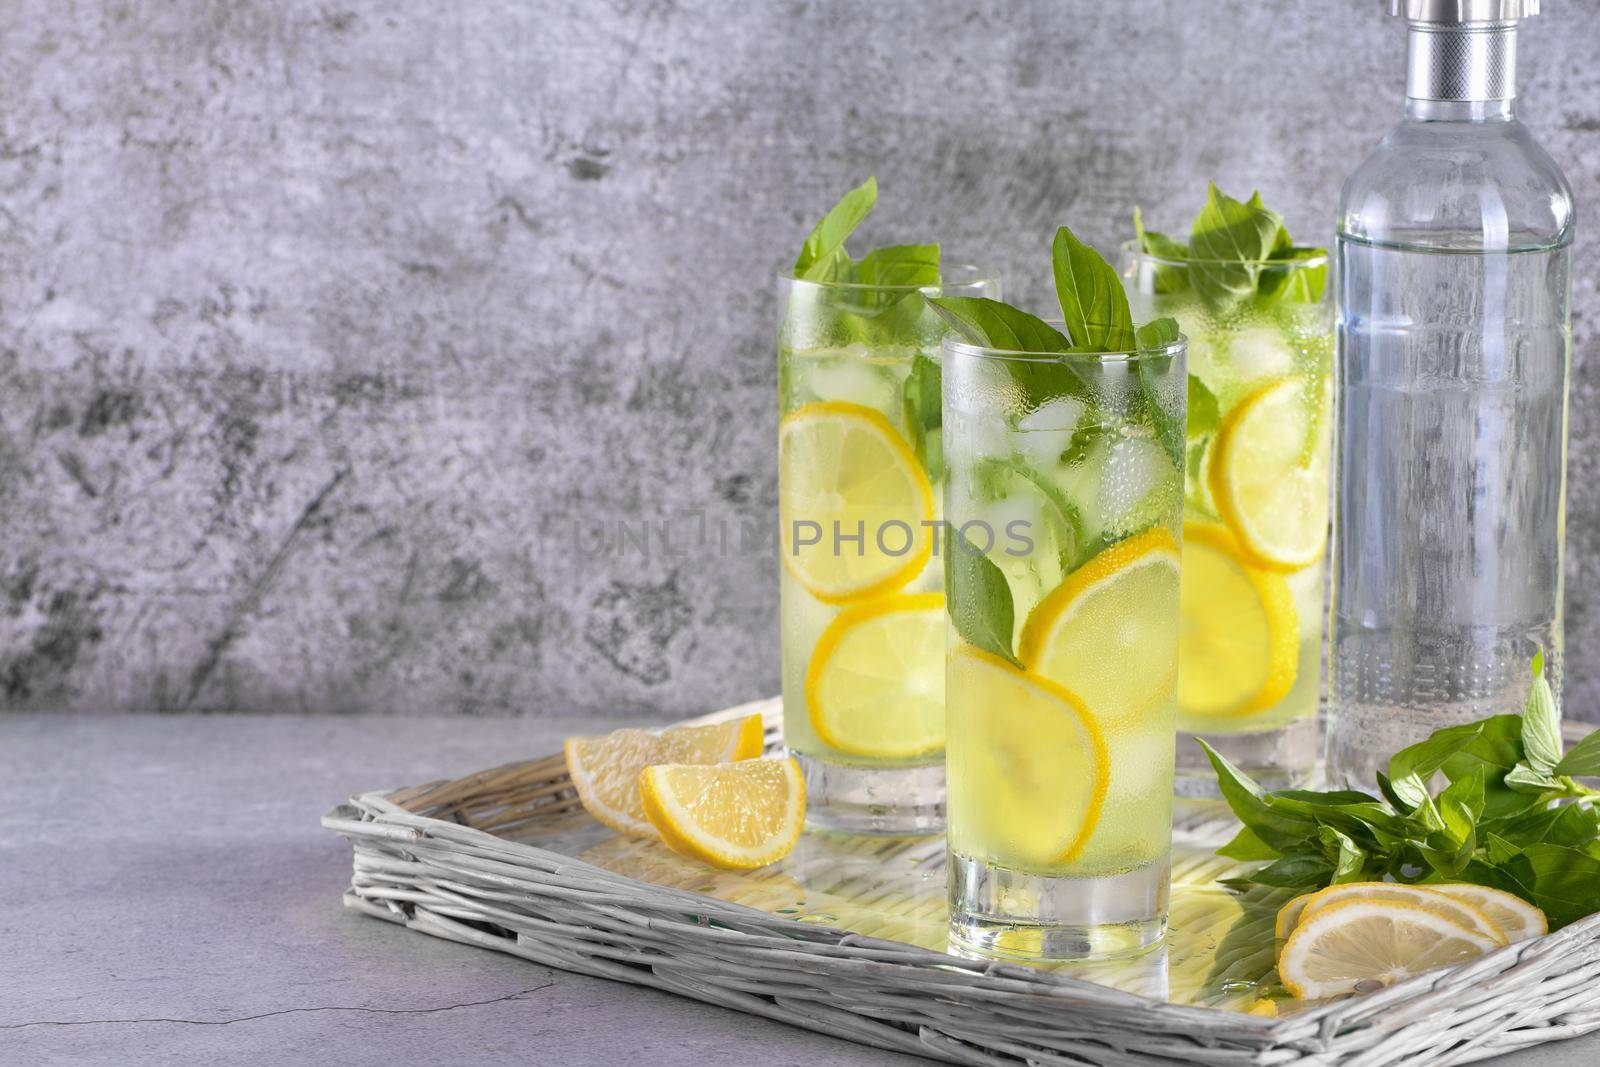 Basil Lemon Gin and Tonic by Apolonia